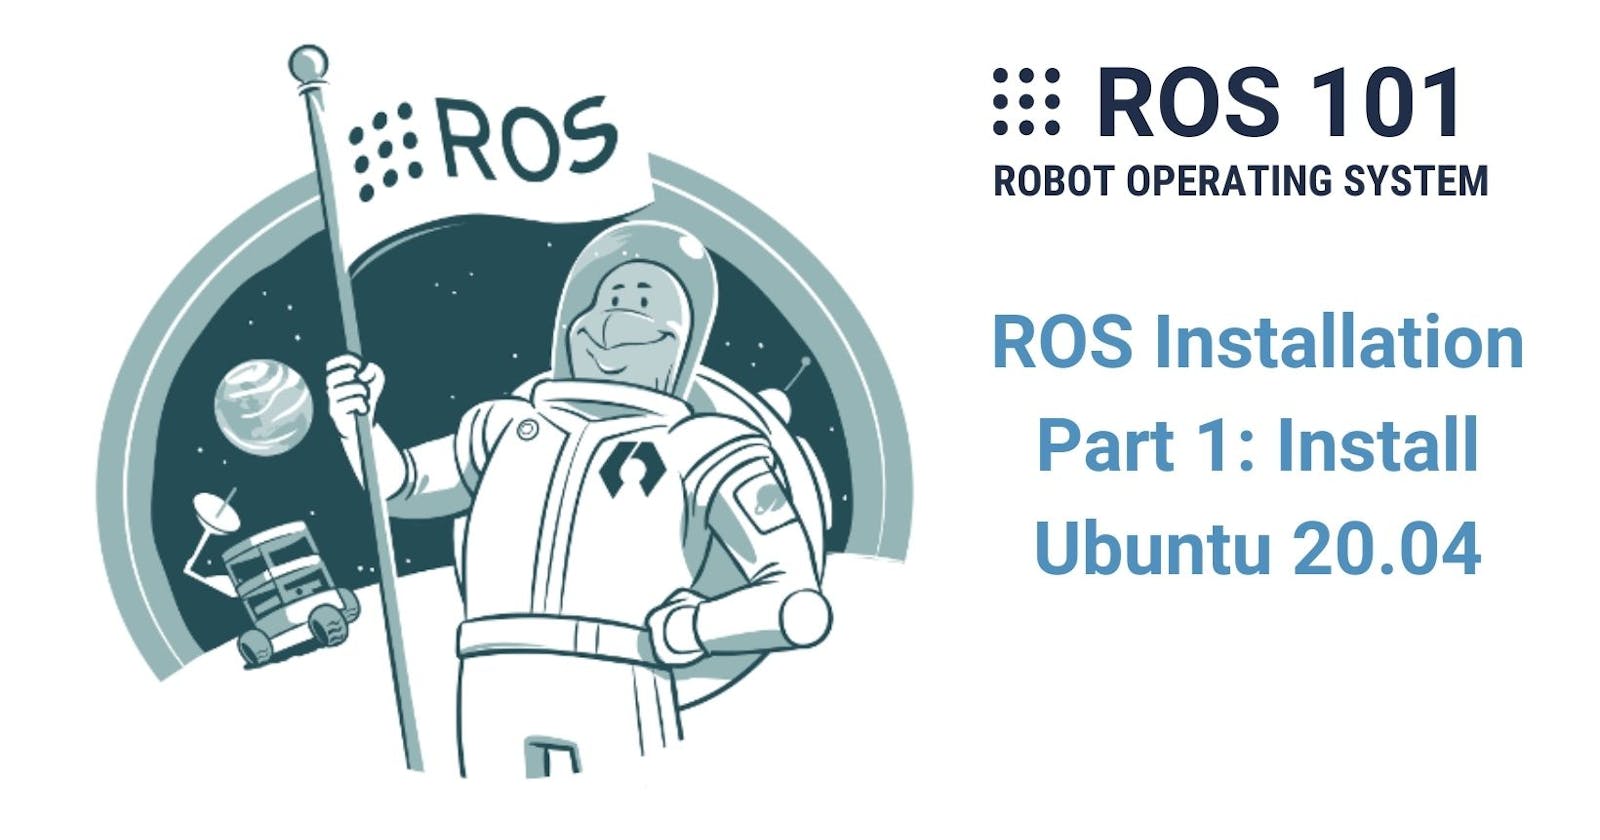 3. ROS Installation - Part 1: Install Ubuntu 20.04